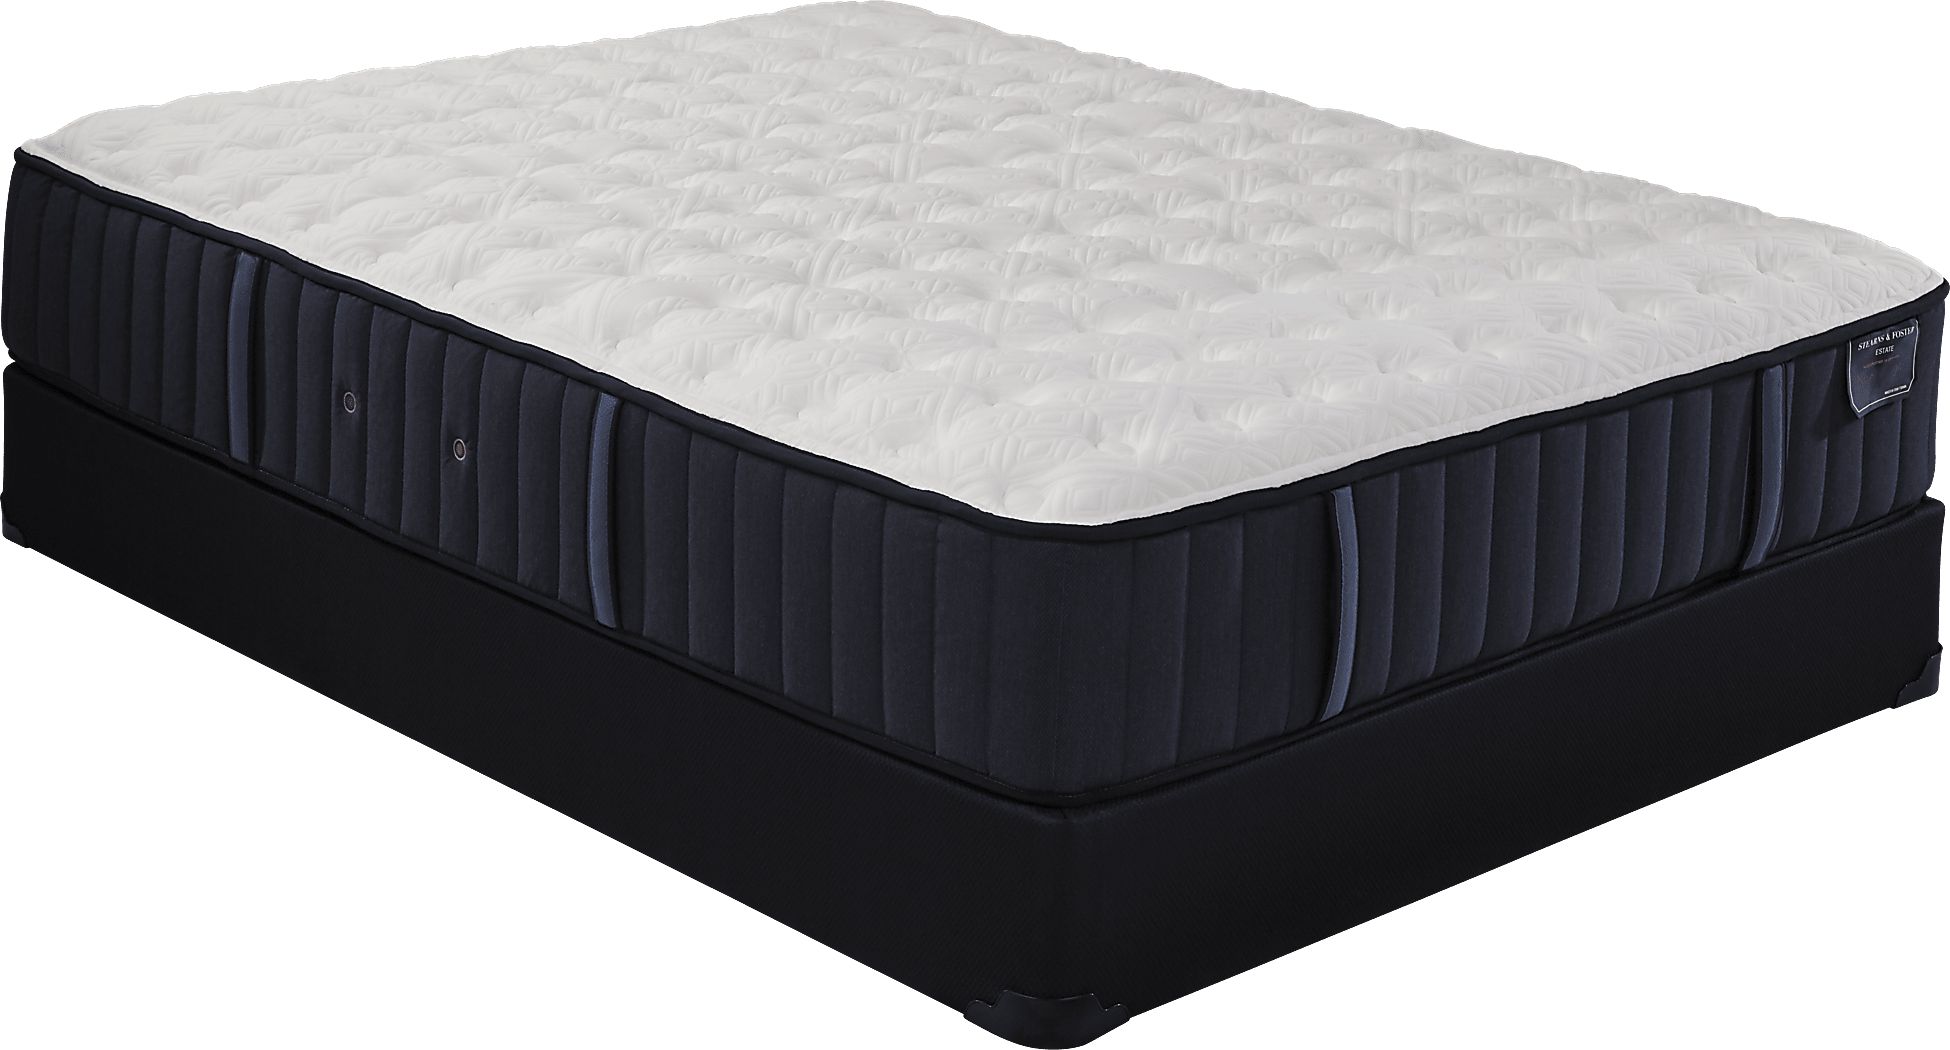 stearns and foster hurston cushion firm mattress